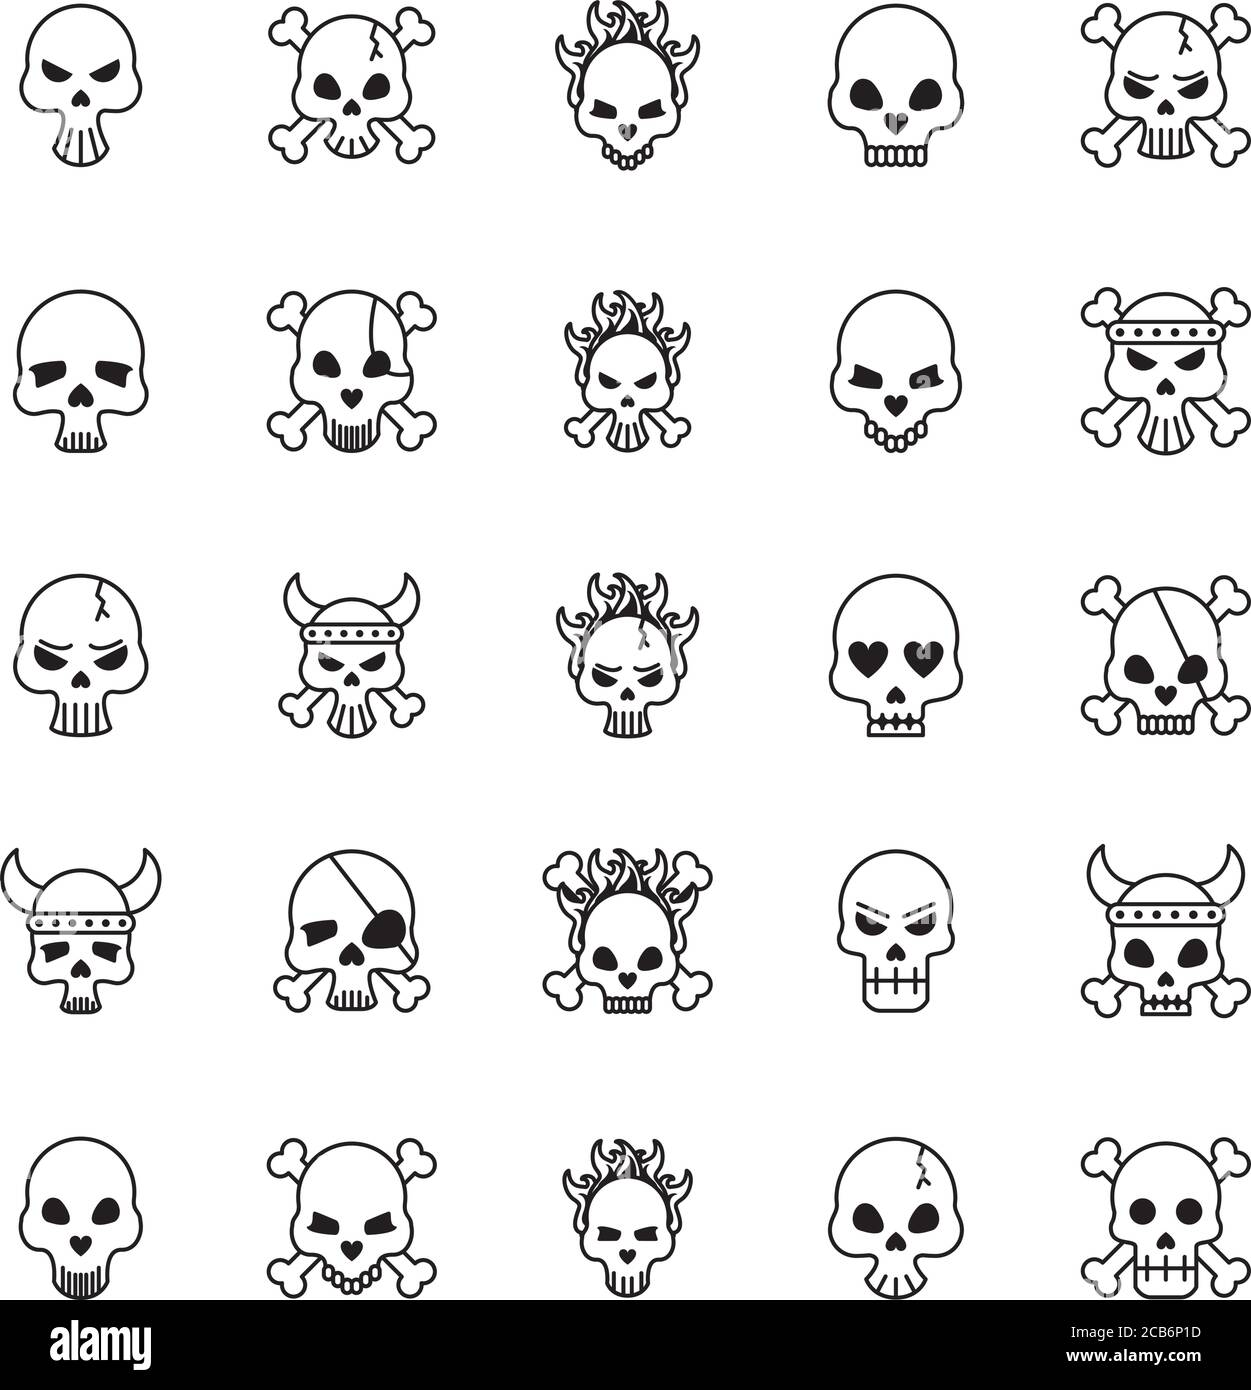 twenty five death skulls heads set collection icons vector illustration design Stock Vector